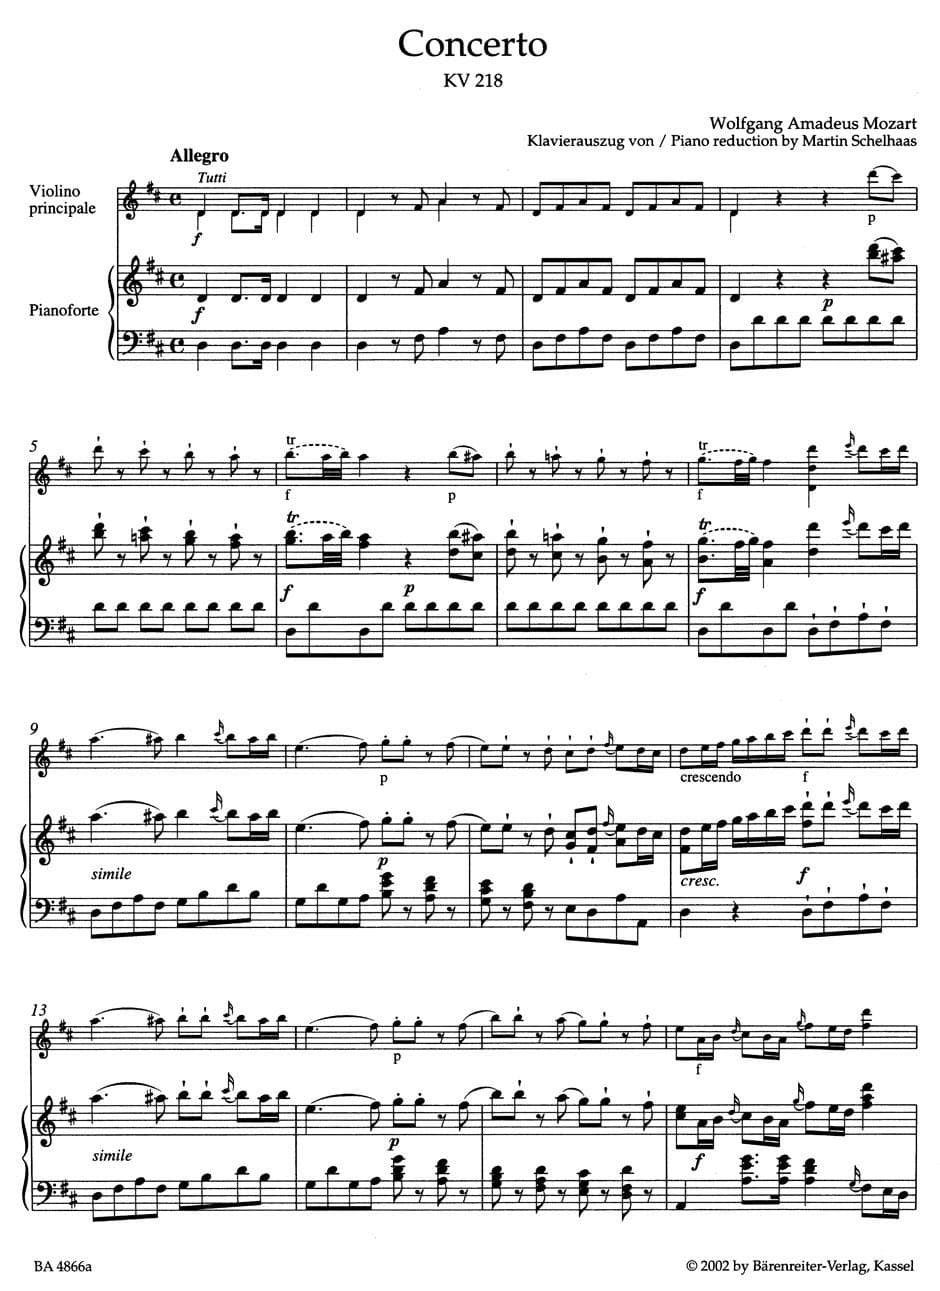 Mozart, WA - Concerto No 4 in D Major, K 218 - Violin and Piano - edited by Mahling et al - cadenzas by Joachim et al - Bärenreiter Verlag URTEXT